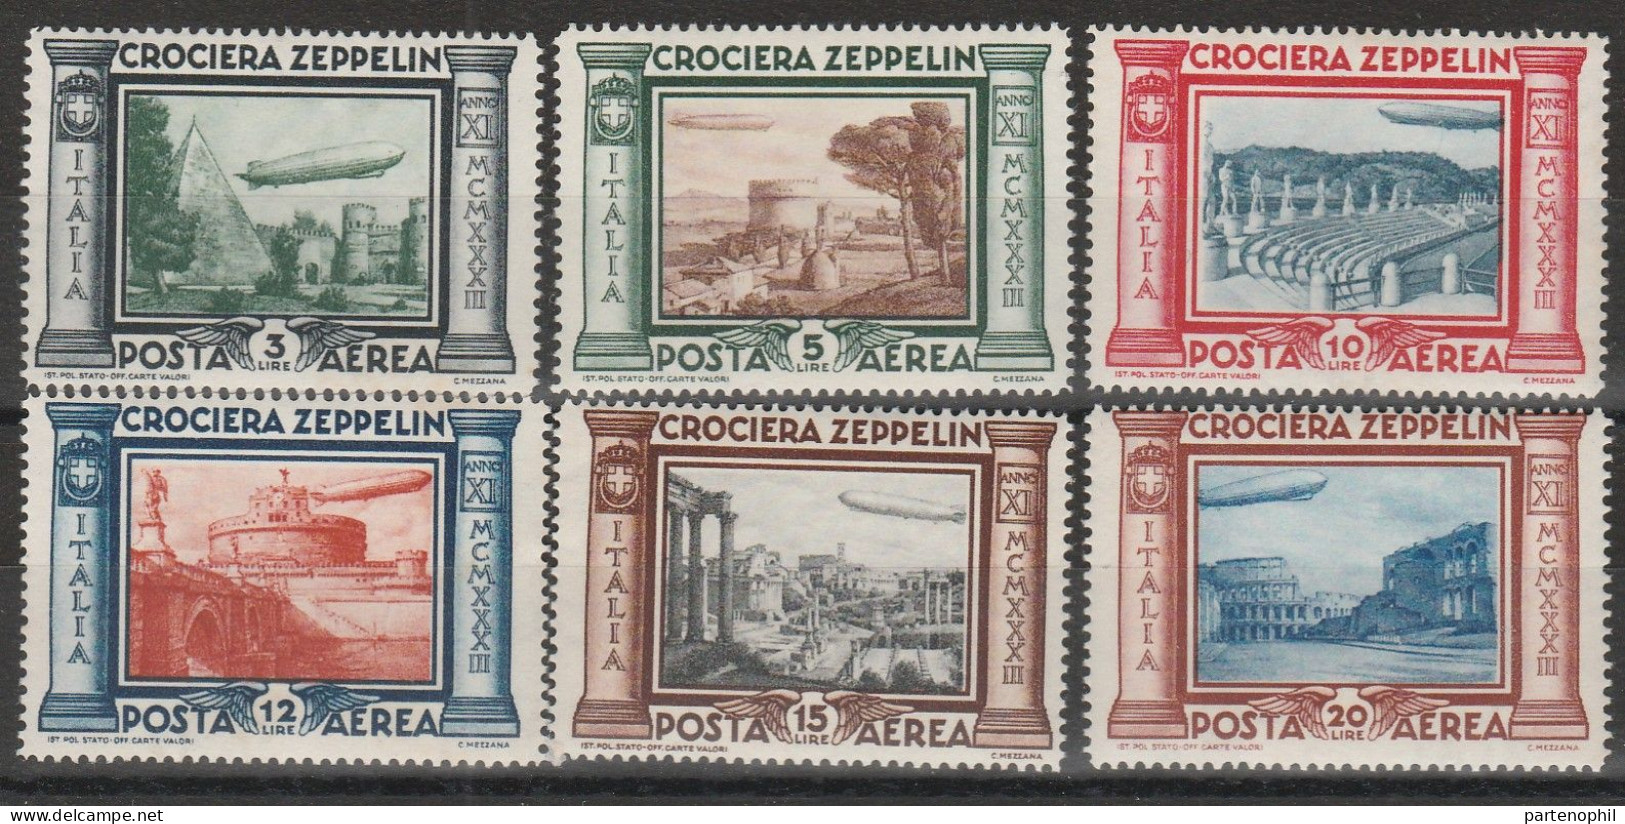 154 Italia Regno - Posta Aerea - 1933 - Crociera Zeppelin N. 45/50. Cert. Todisco. Cat. € 450,00. MNH - Oorlogspropaganda